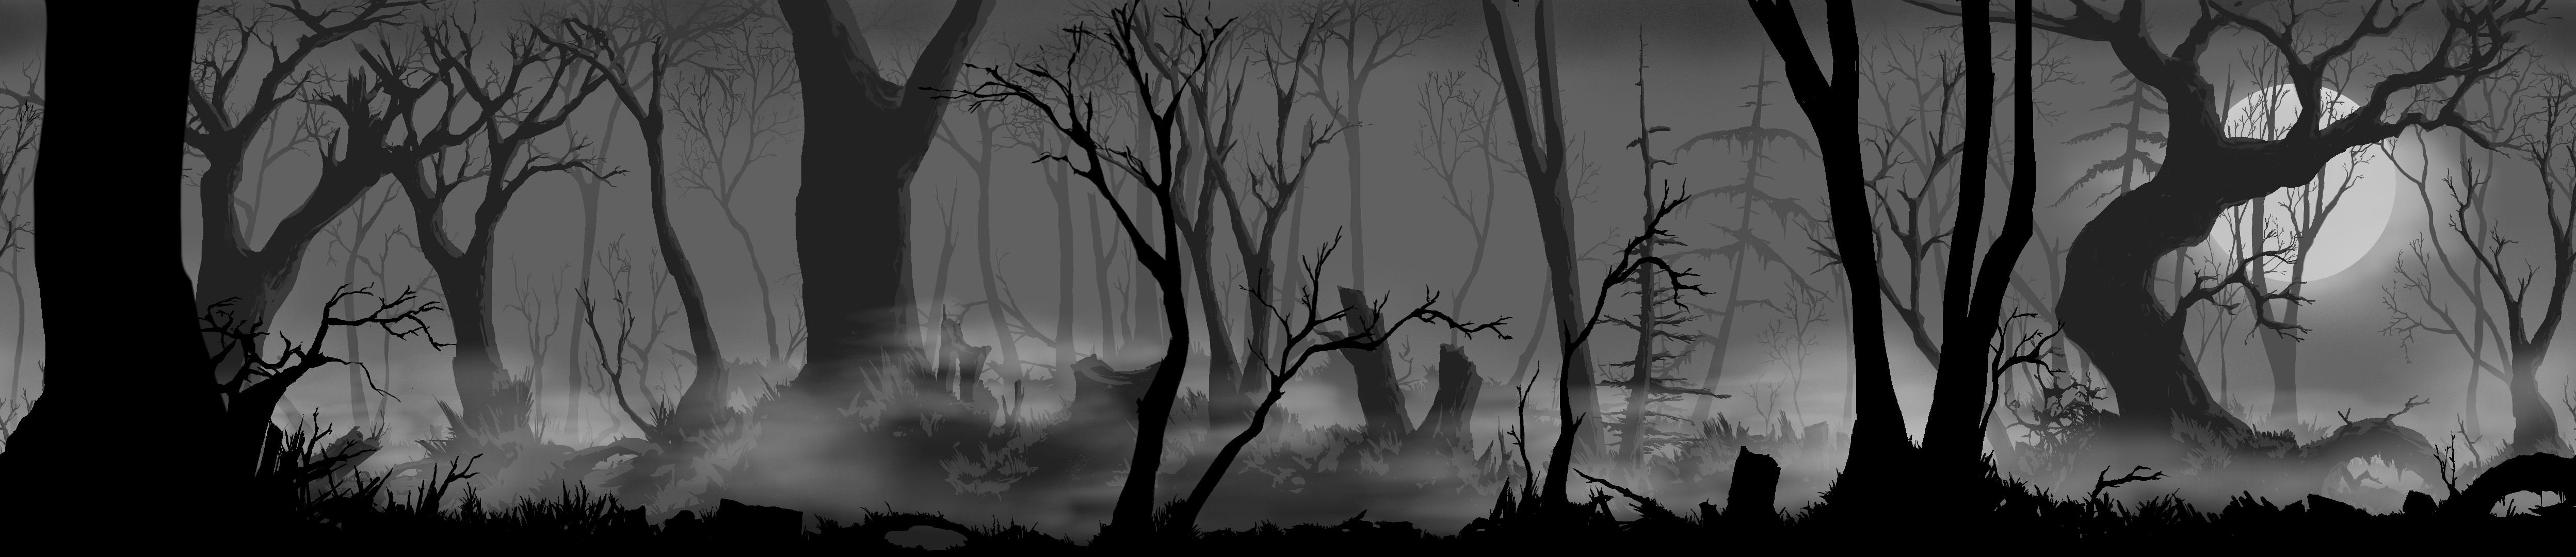 Spooky Woods by Trideka Designs